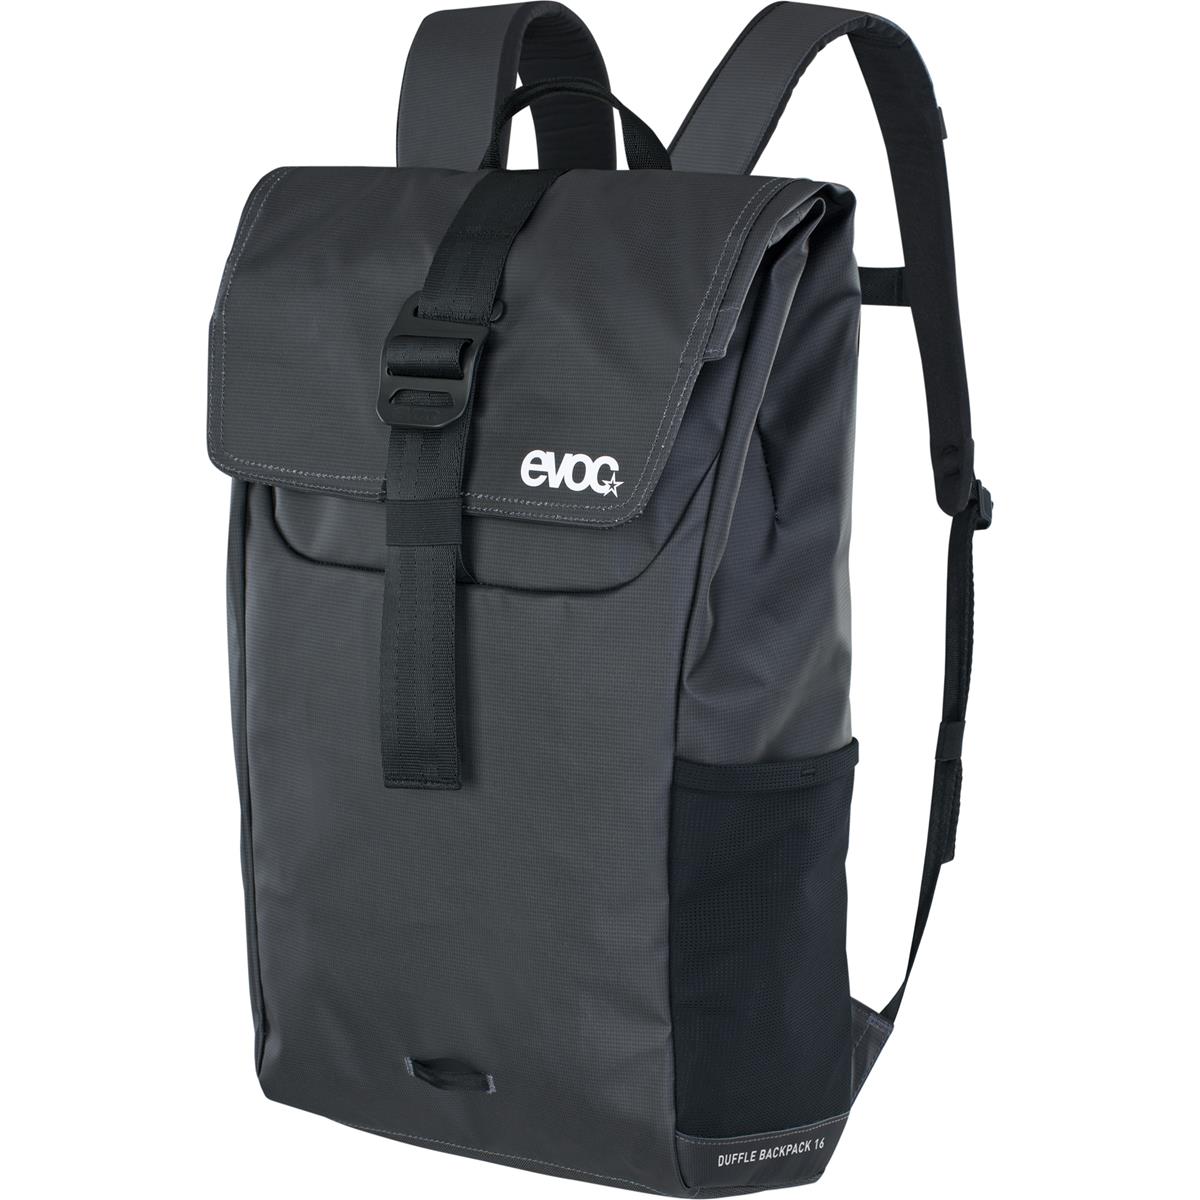 Evoc Rucksack Duffle Backpack 16 Carbon Grau/Schwarz